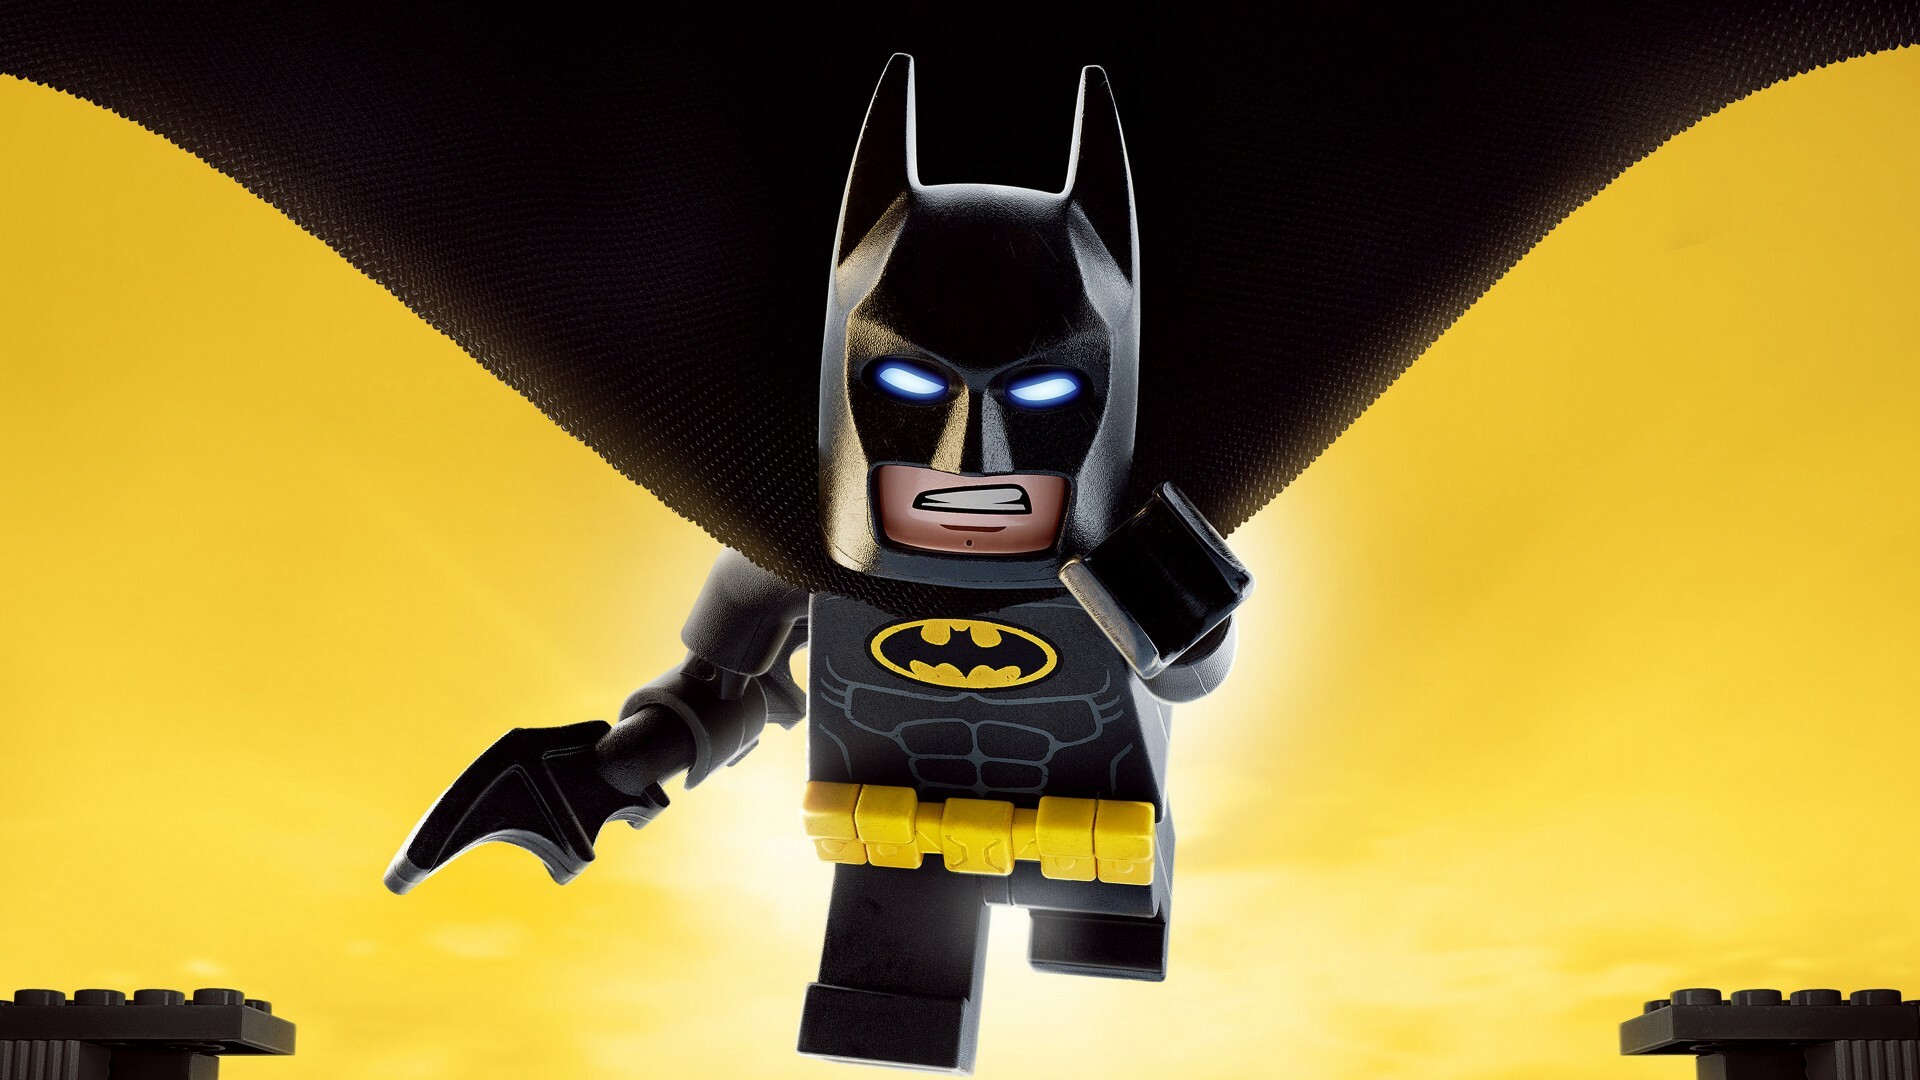 The Lego Movie: A 2017 computer-animated superhero comedy film, Batman. 1920x1080 Full HD Background.